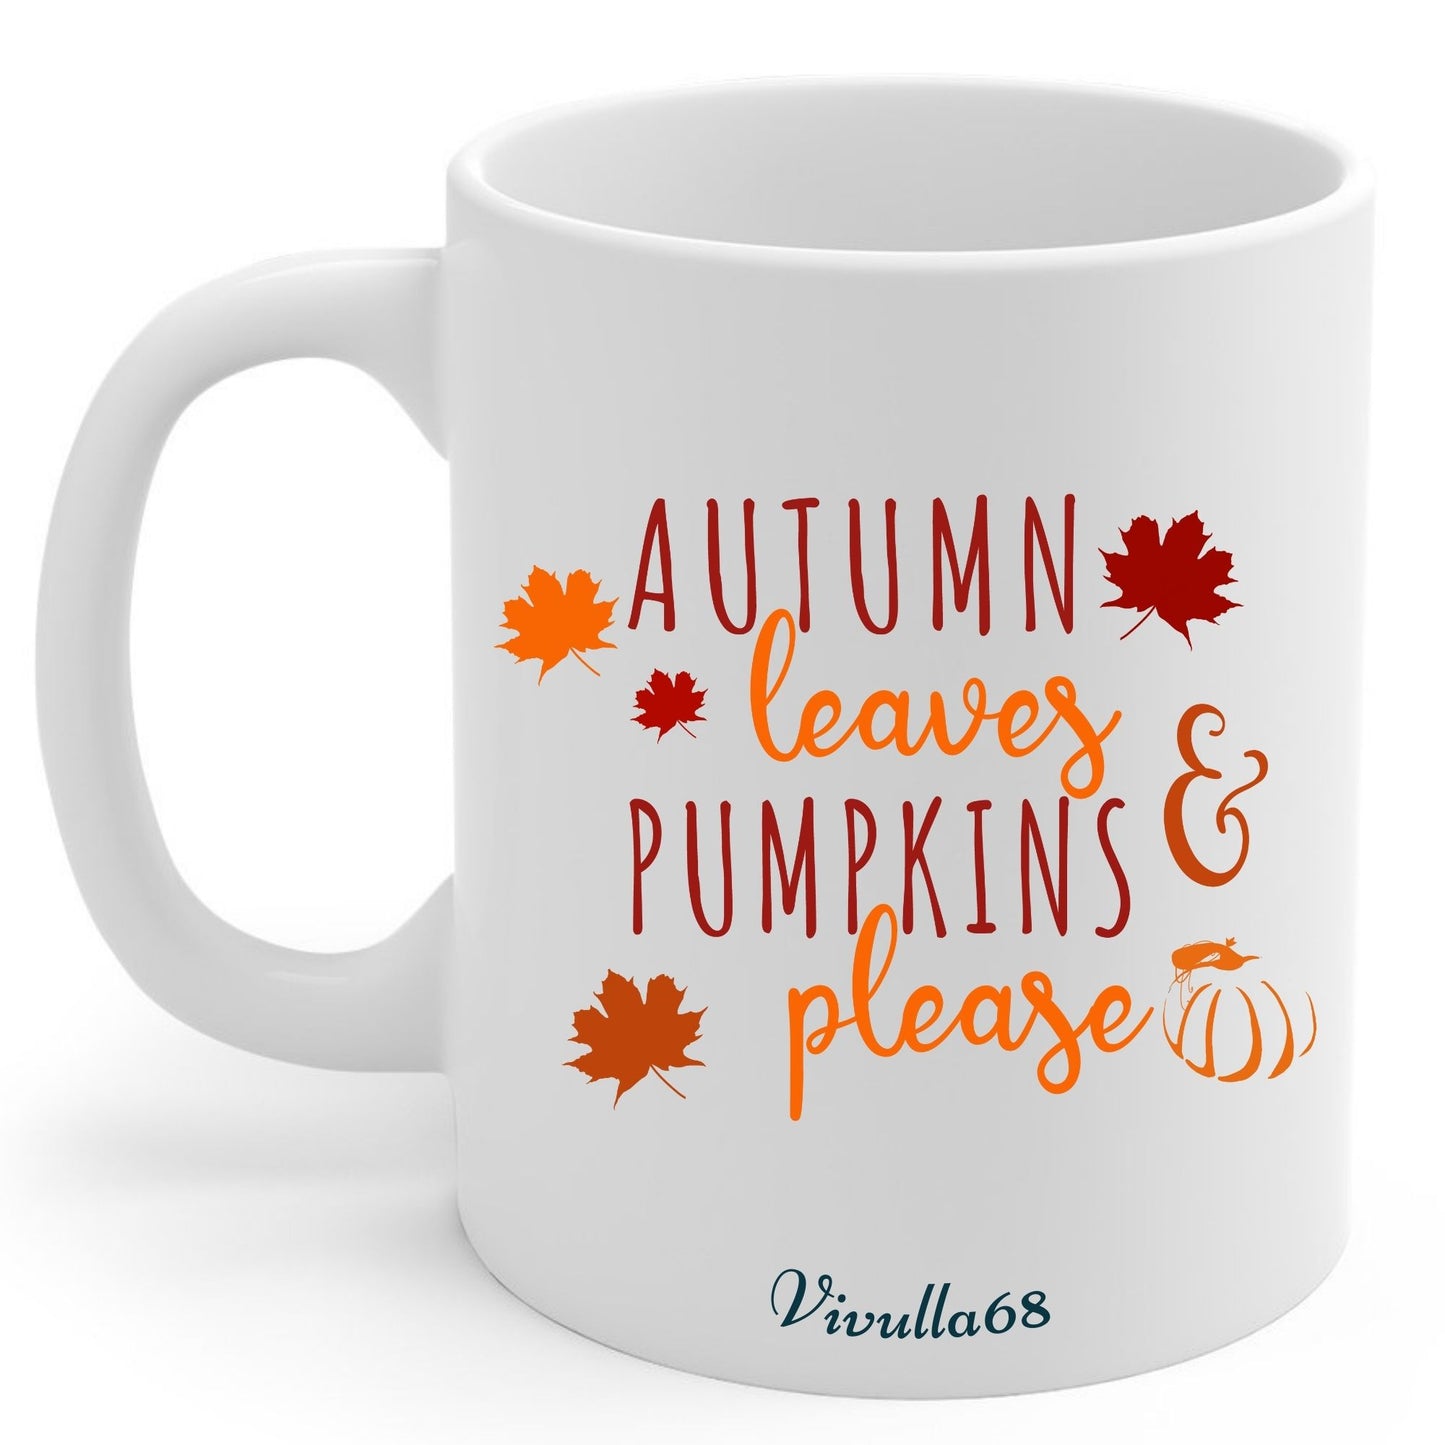 Vivulla68 11oz Autumn Leaves and Pumpkin Please Ceramic Mug Sweater Weather Mug Cute Spooky Halloween Fall Coffee Ceramic Mug Cups Gift Ideas Autumn Coffee Mug